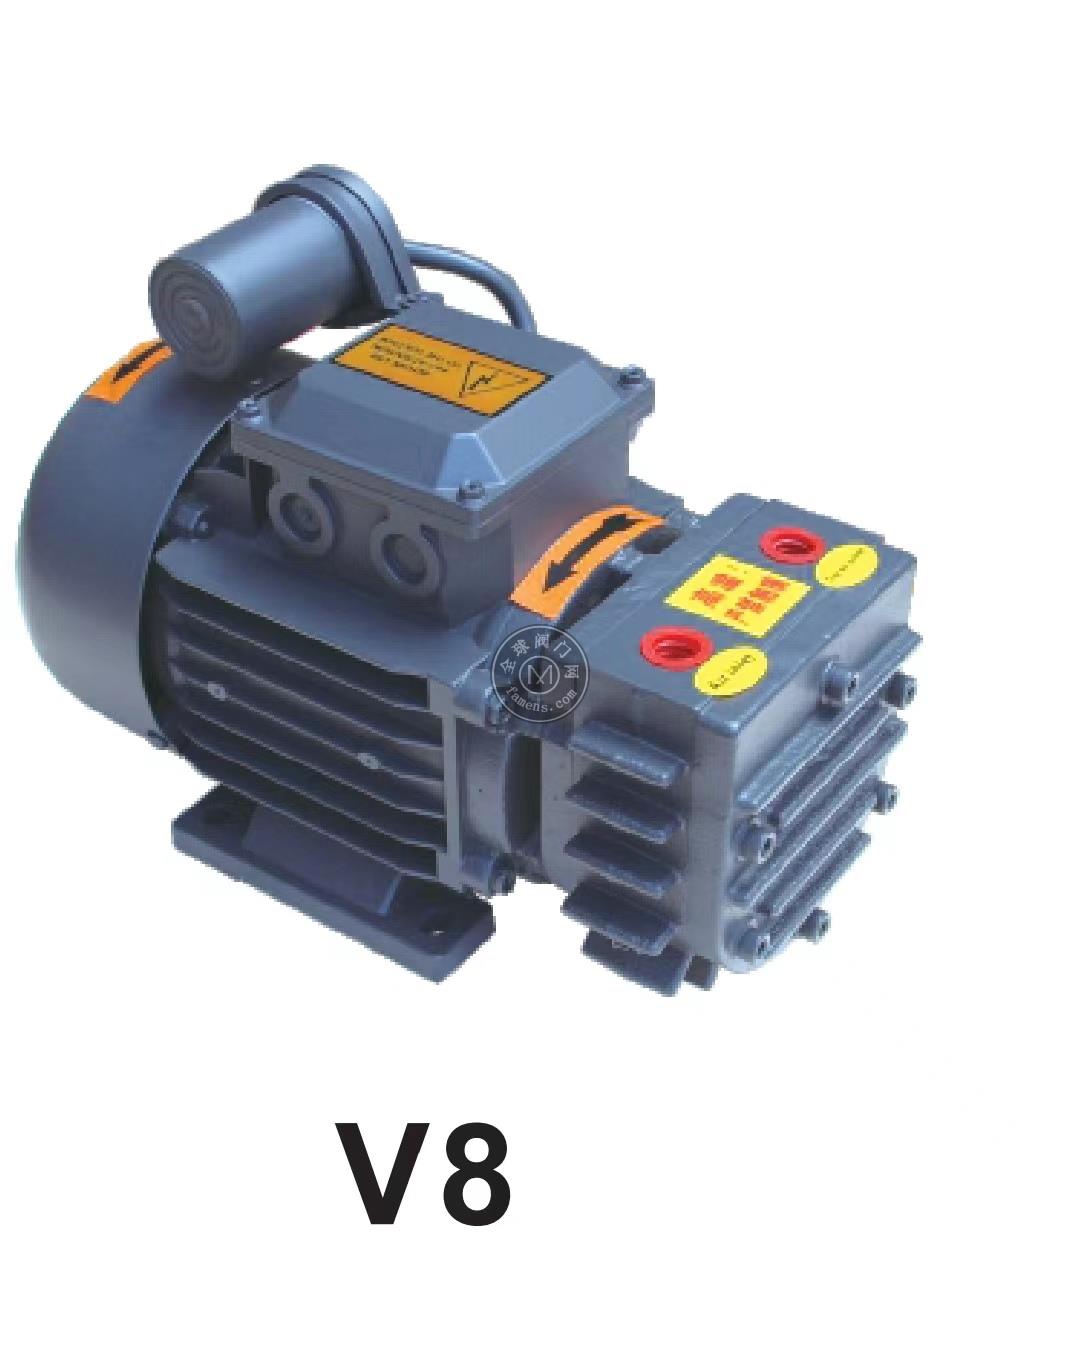 V8真空泵 機械手真空泵 自動化設備真空泵 SMT氣泵